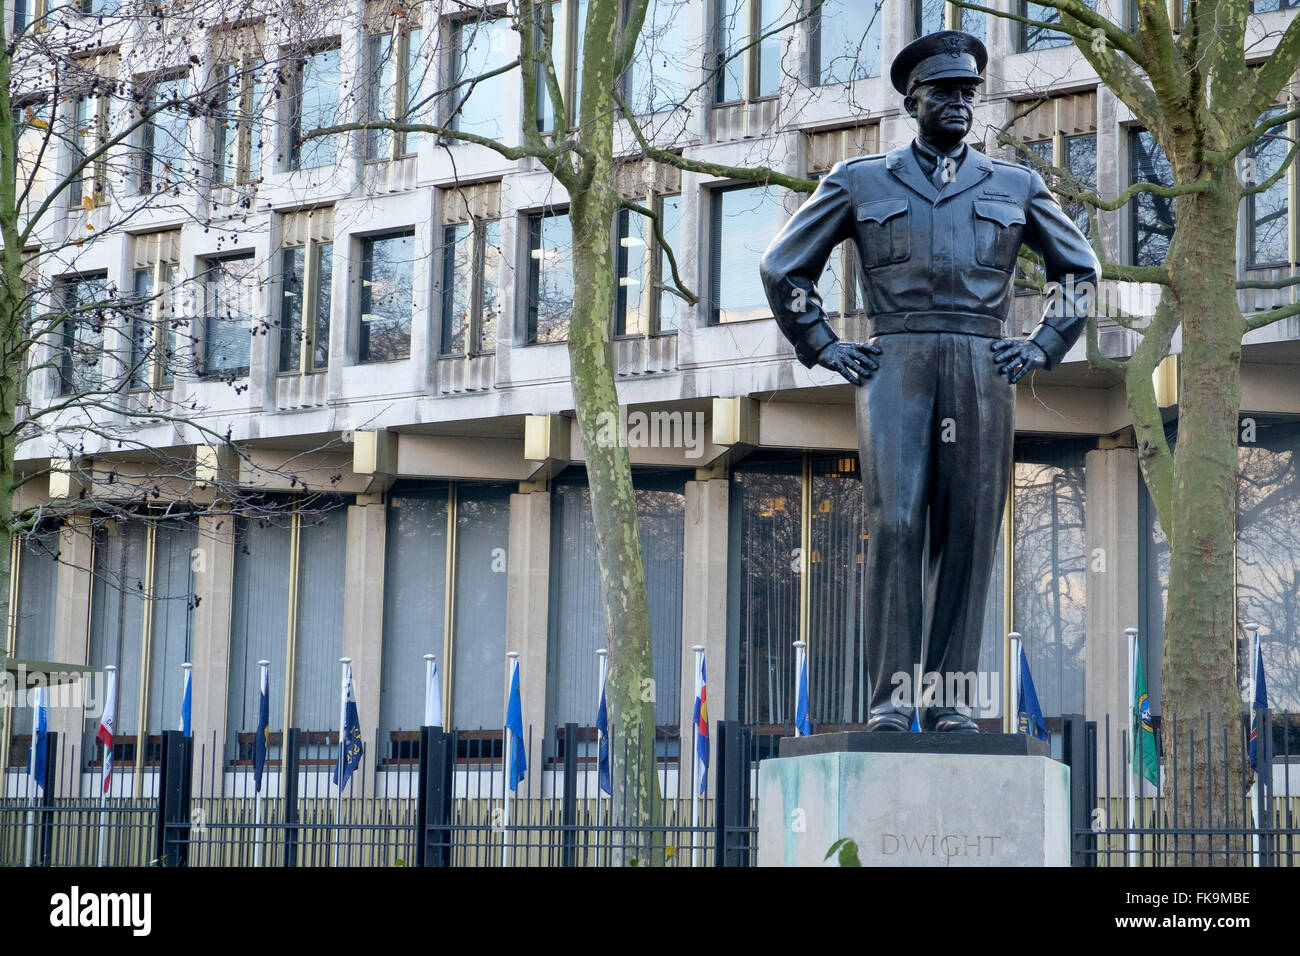 London, UK - 24 February 2016: Statue of Dwight D. Eisenhower outside the American Embassy in Grosvenor Square, Mayfair, London Stock Photo